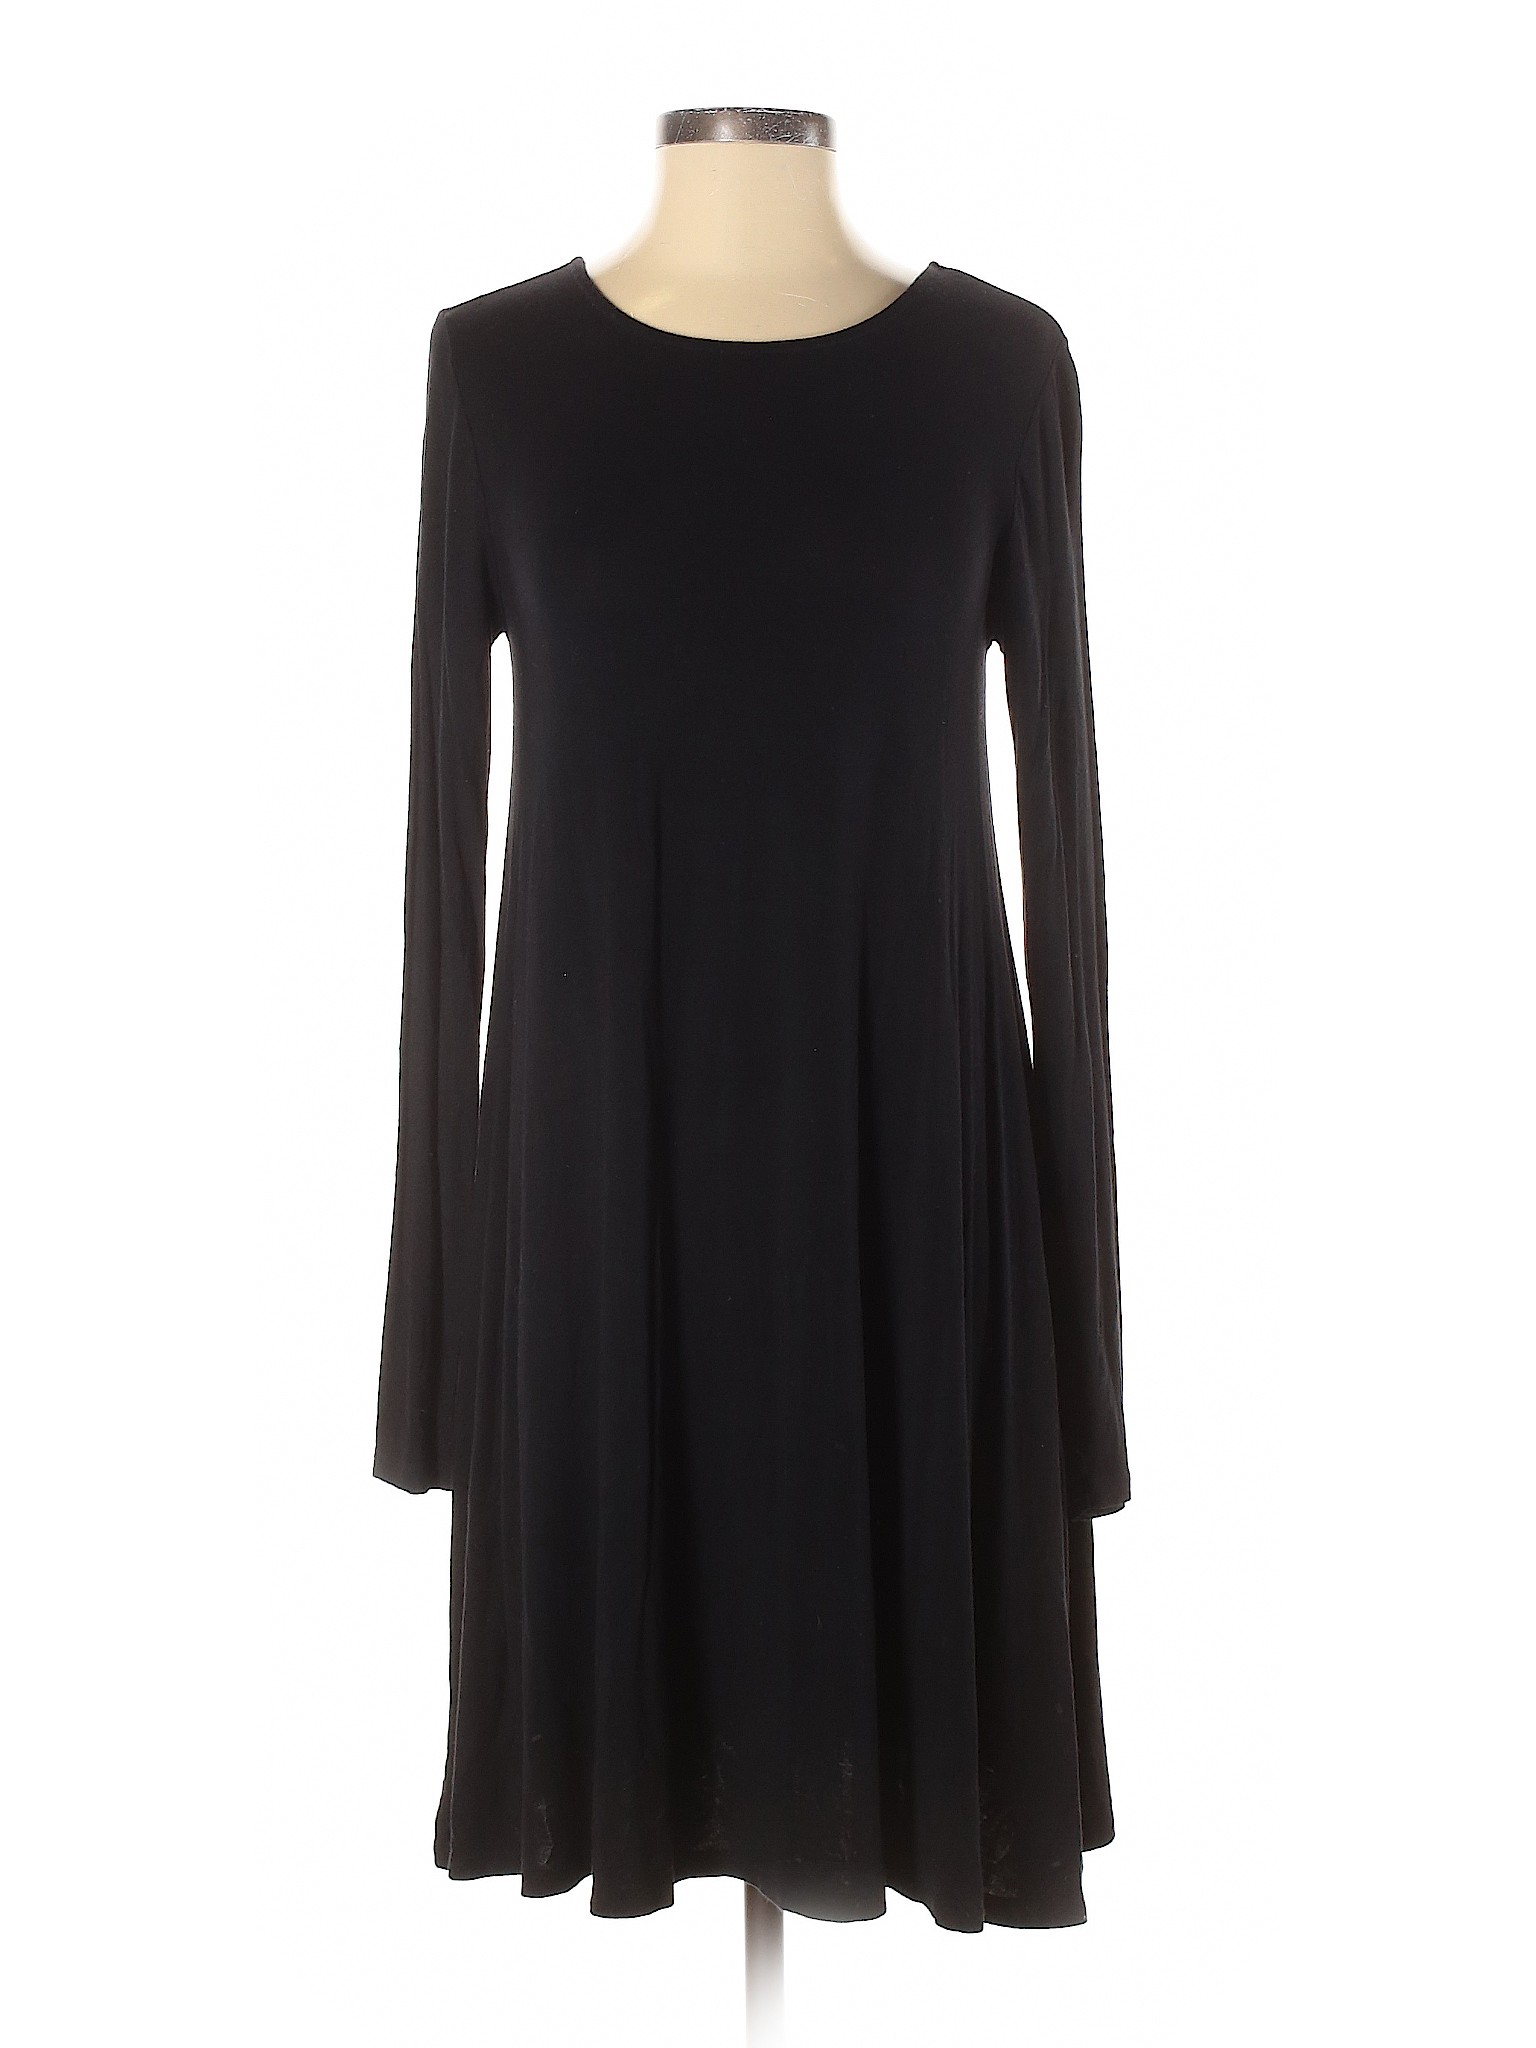 Old Navy Women Black Casual Dress S Petites | eBay